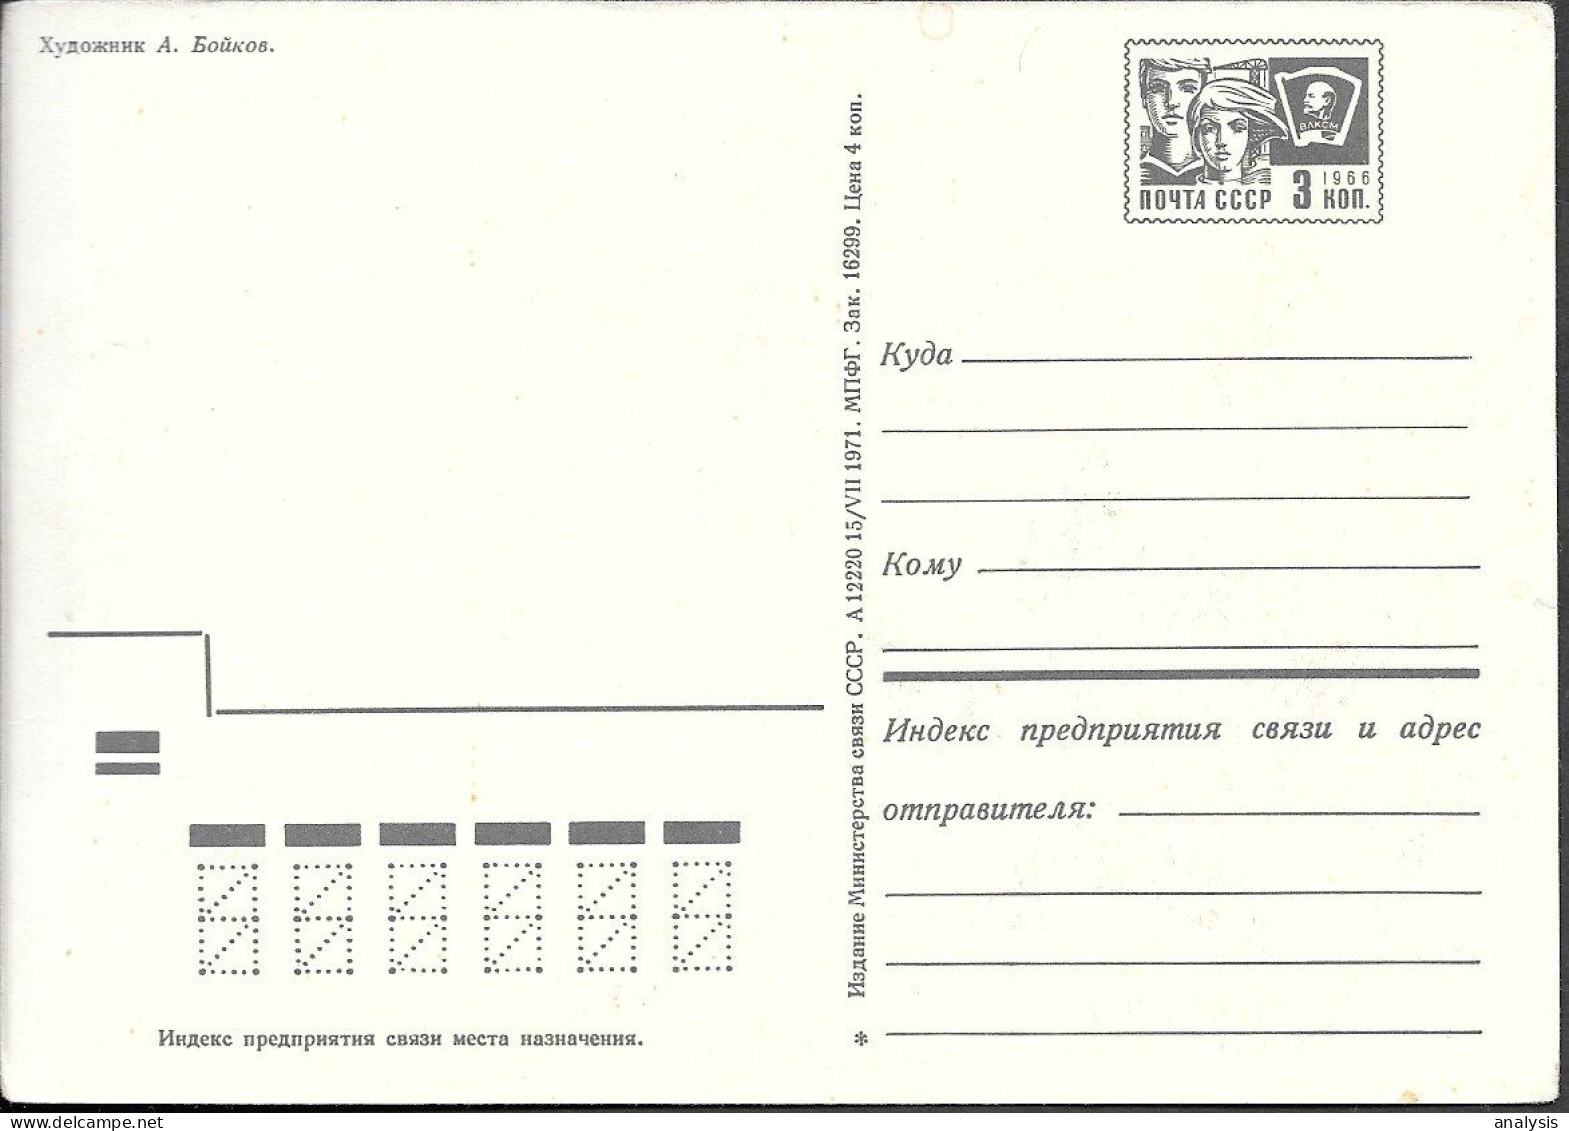 Russia 3K Picture Postal Stationery Card 1971 Unused. Glory To Soviet Army Communist Propaganda - 1970-79